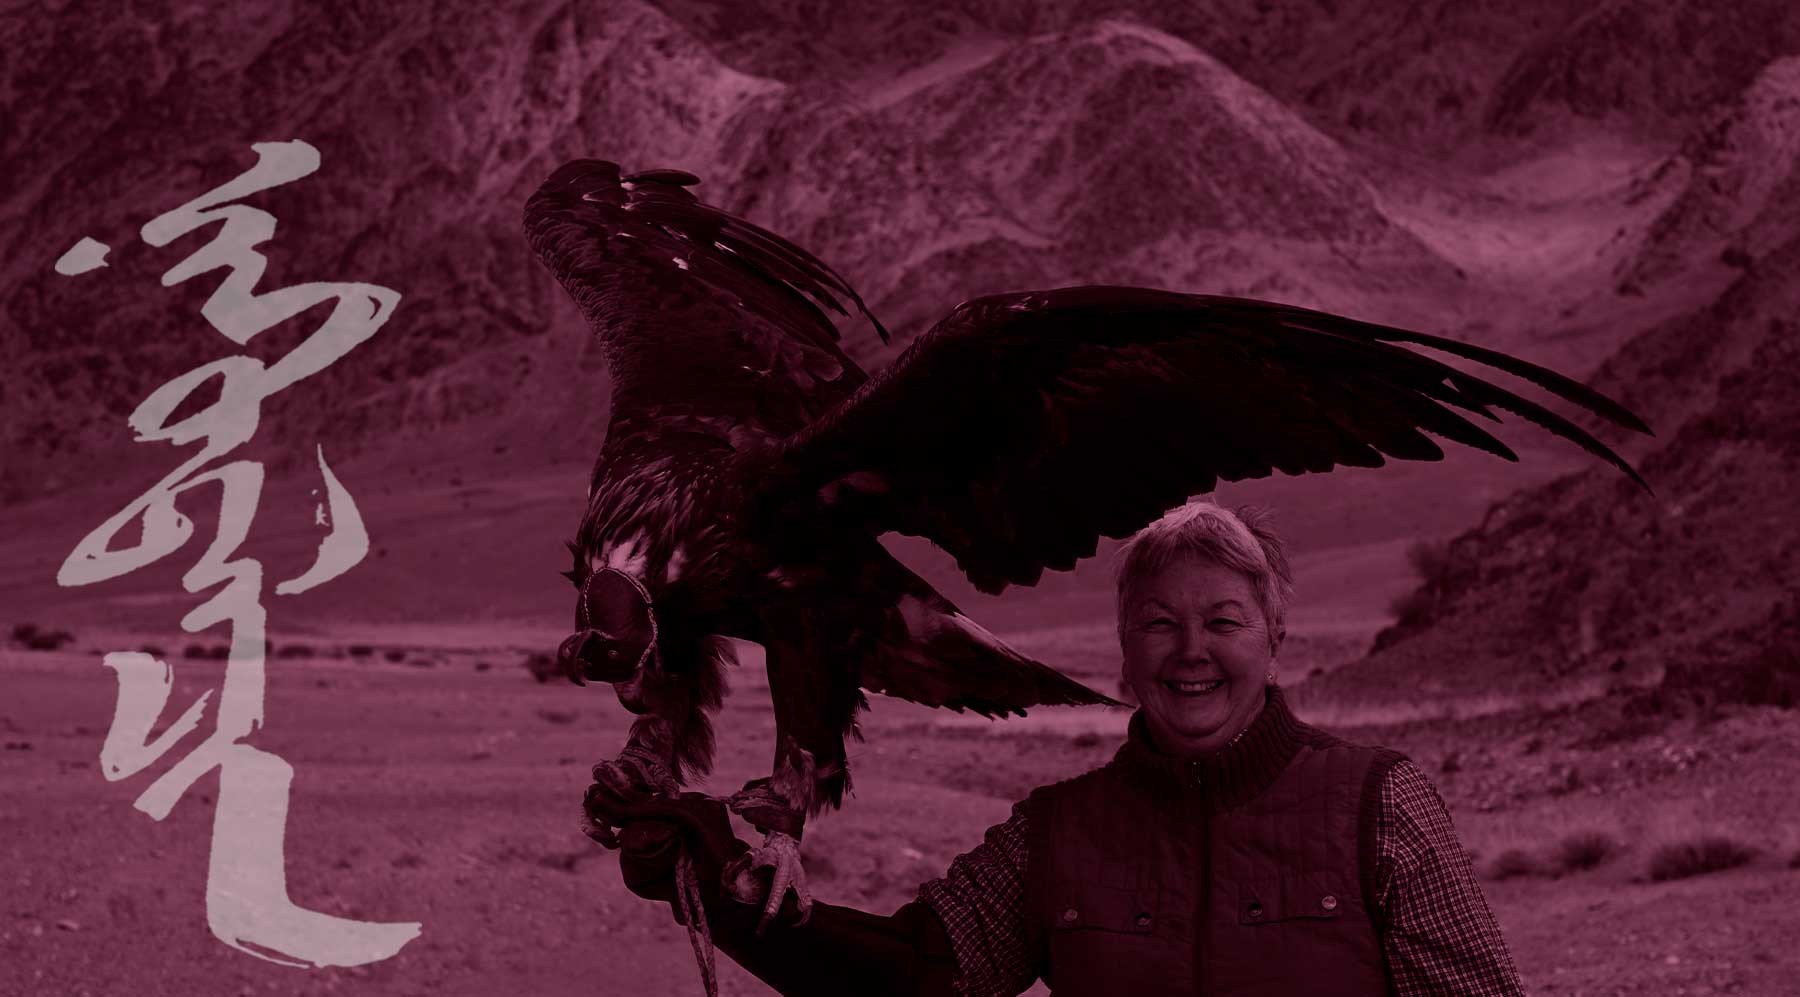 MONGOLIA TRAVEL PHOTOS - Mongolia Eagle Festival - Horseback Wild West - Mongolia Nomads Tours